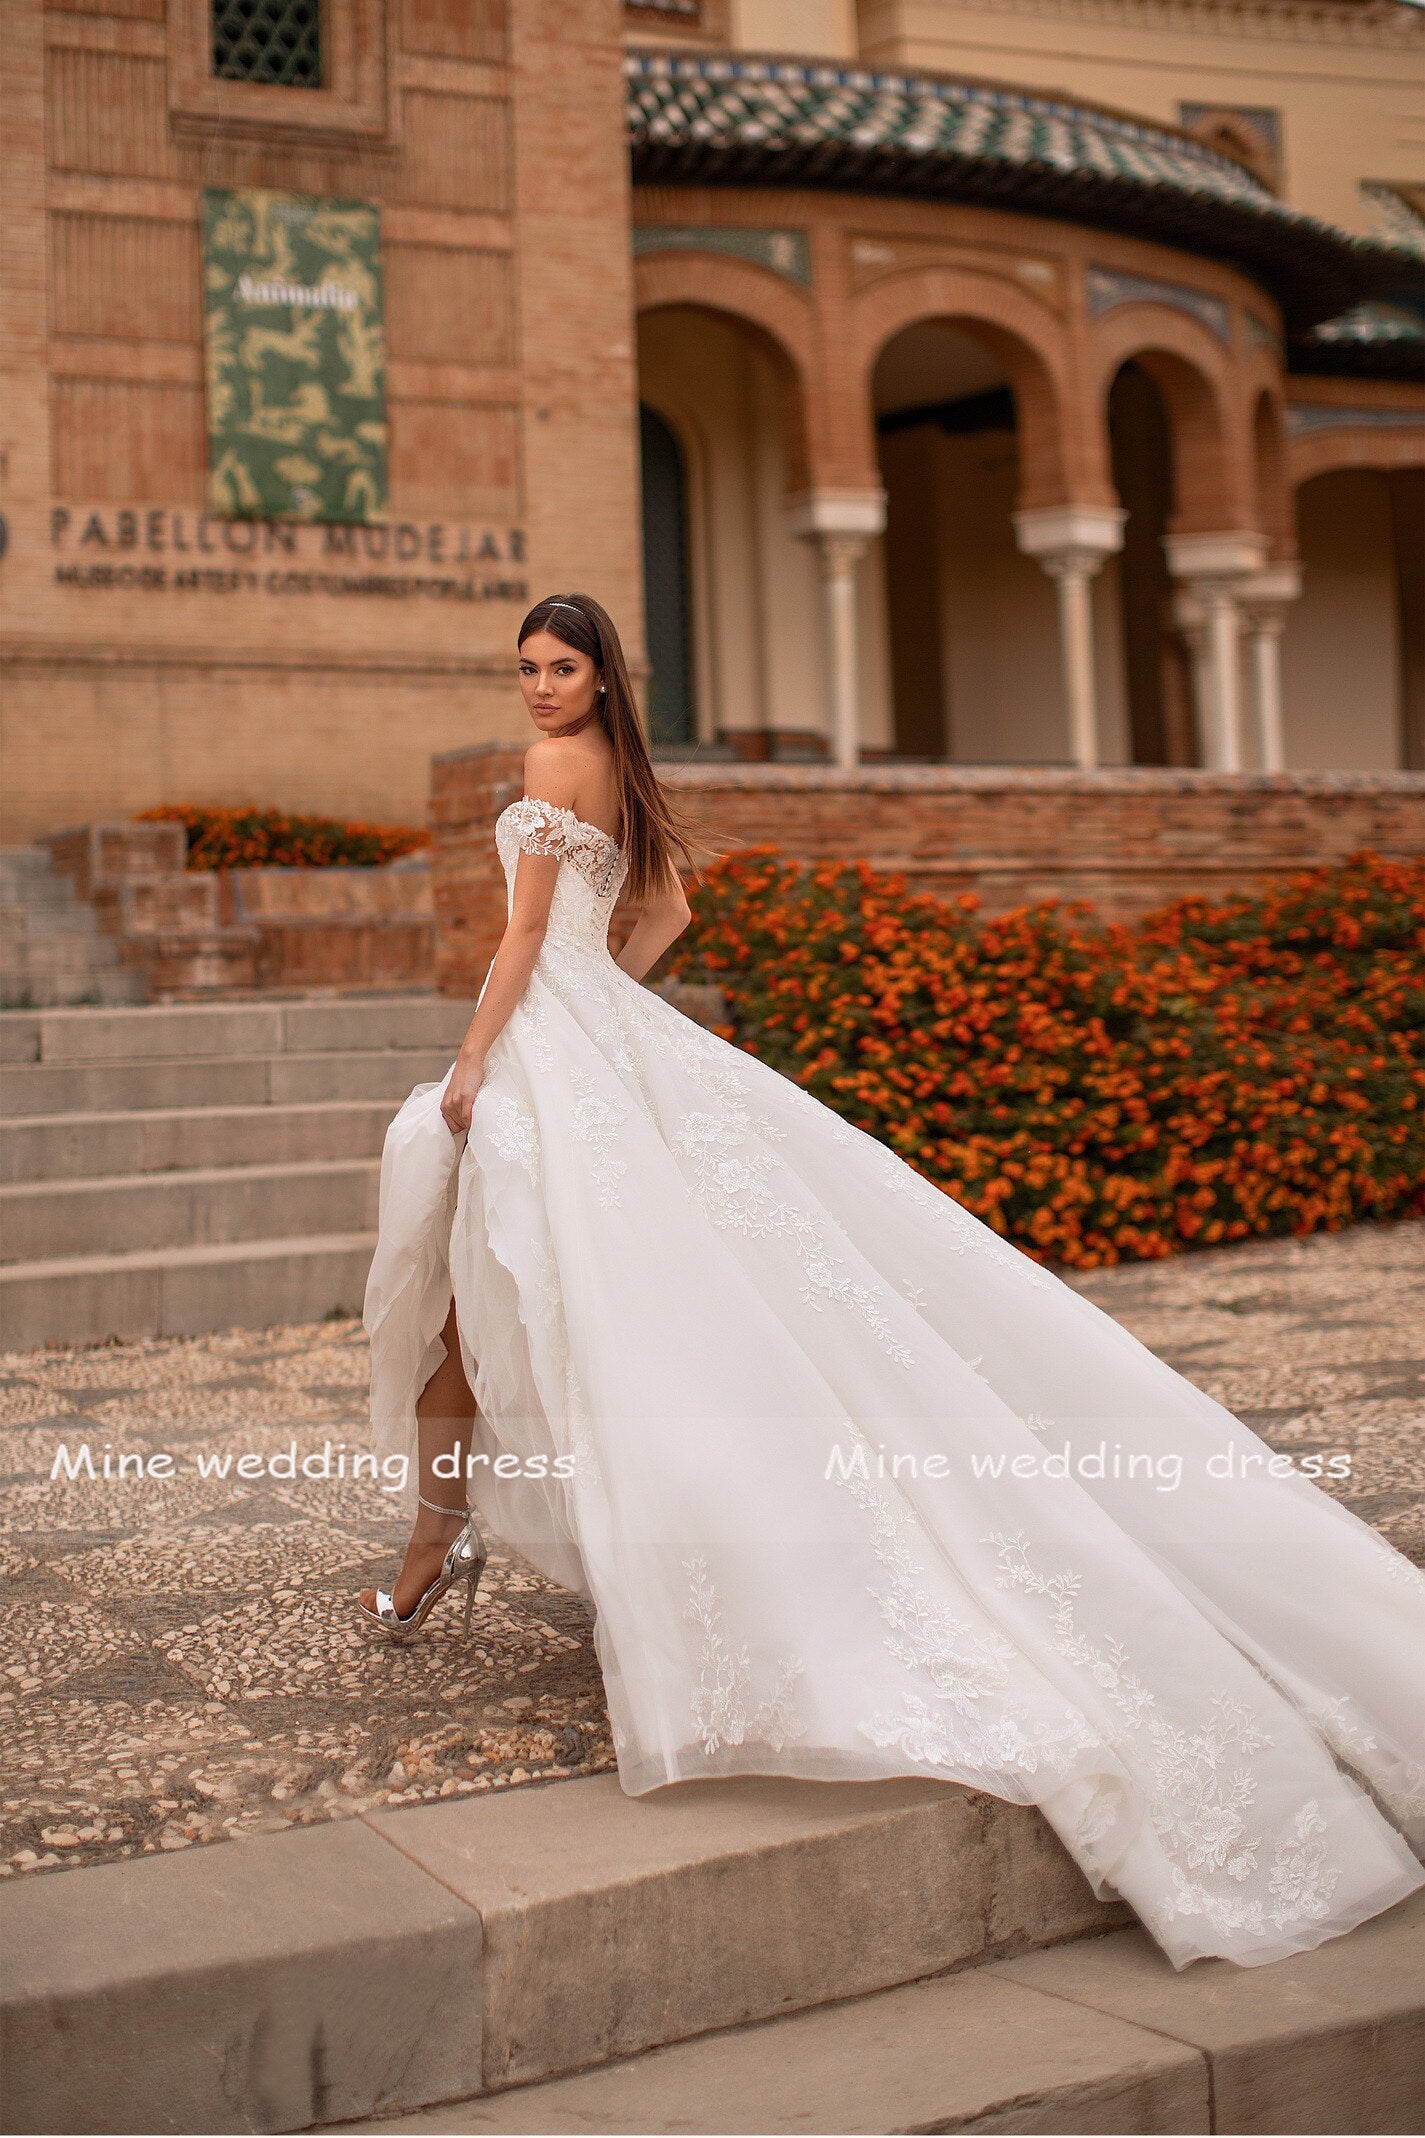 Off Shoulder Sexy V Neck Applqiue Lace A-Line Tulle Wedding Dress 2021 Vestido De Noiva Bridal Gowns - LiveTrendsX